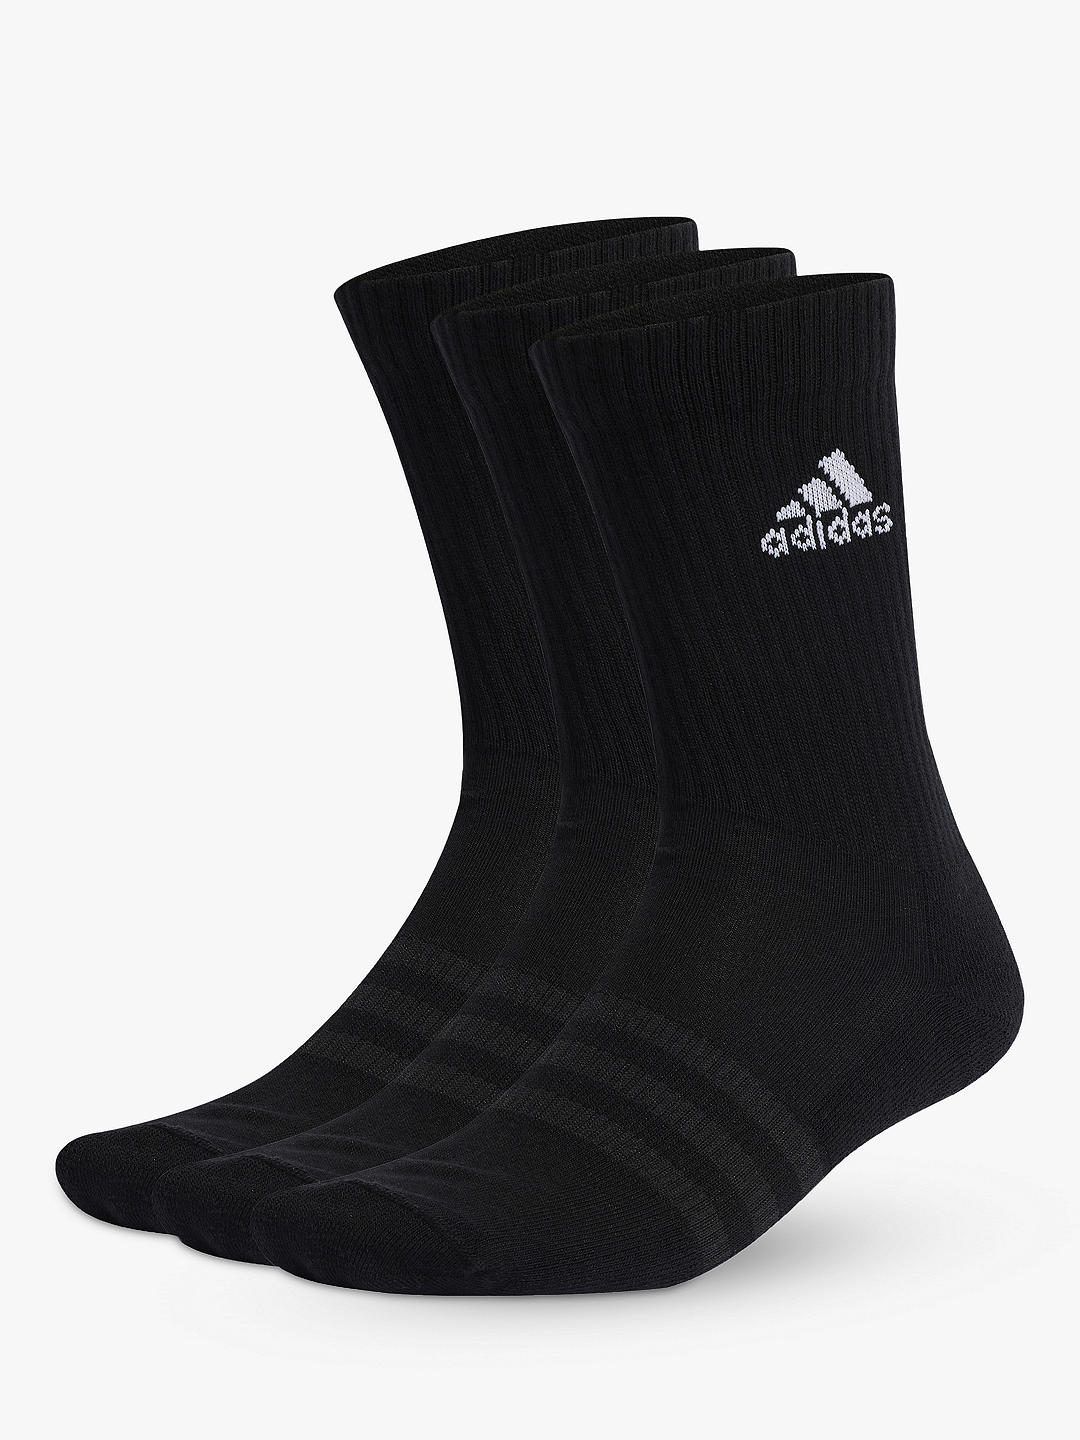 adidas Cushioned Crew Socks, Pack of 3, Black/White